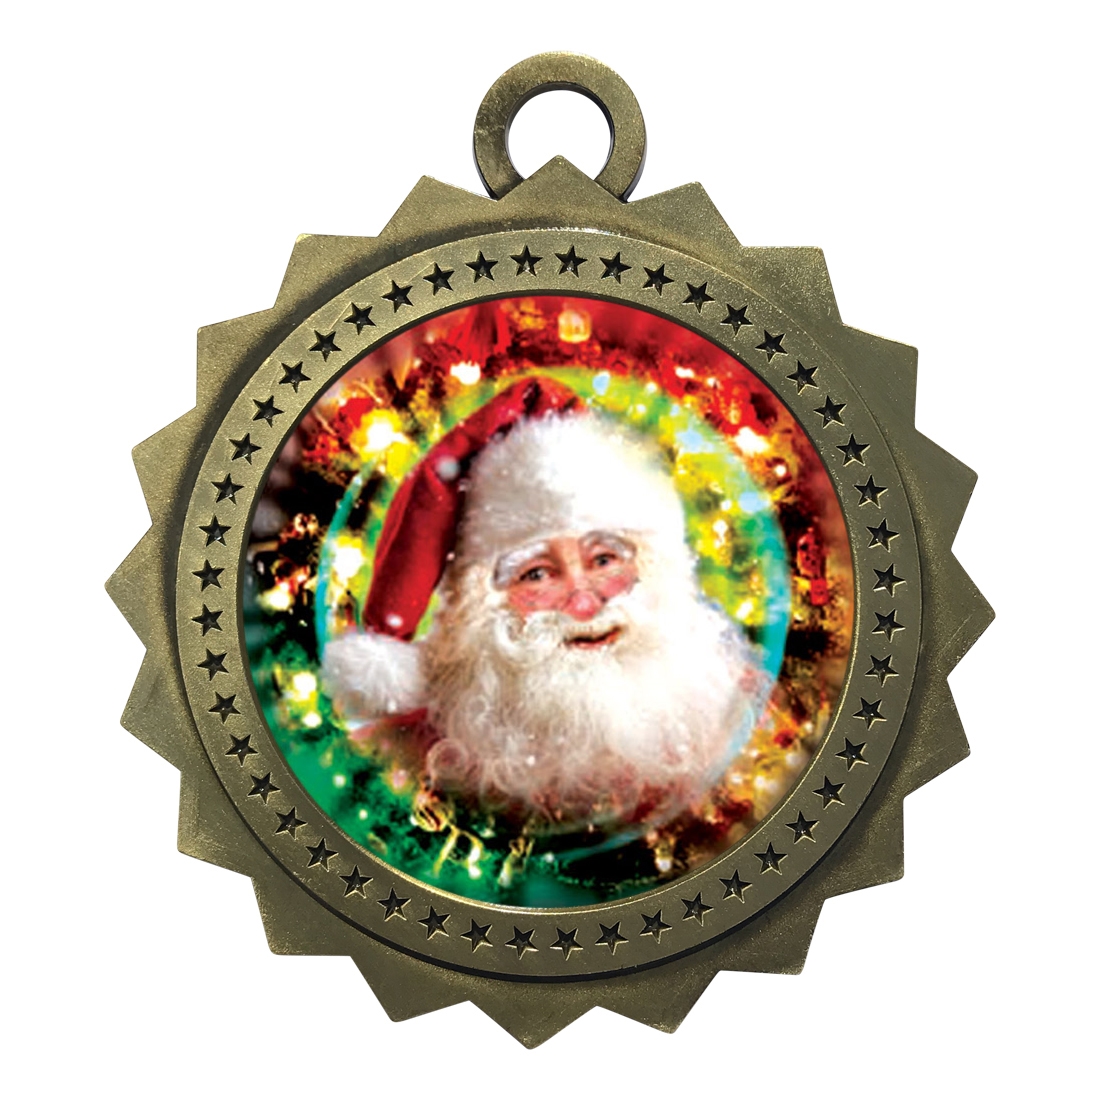 3" Santa Claus Christmas Medal